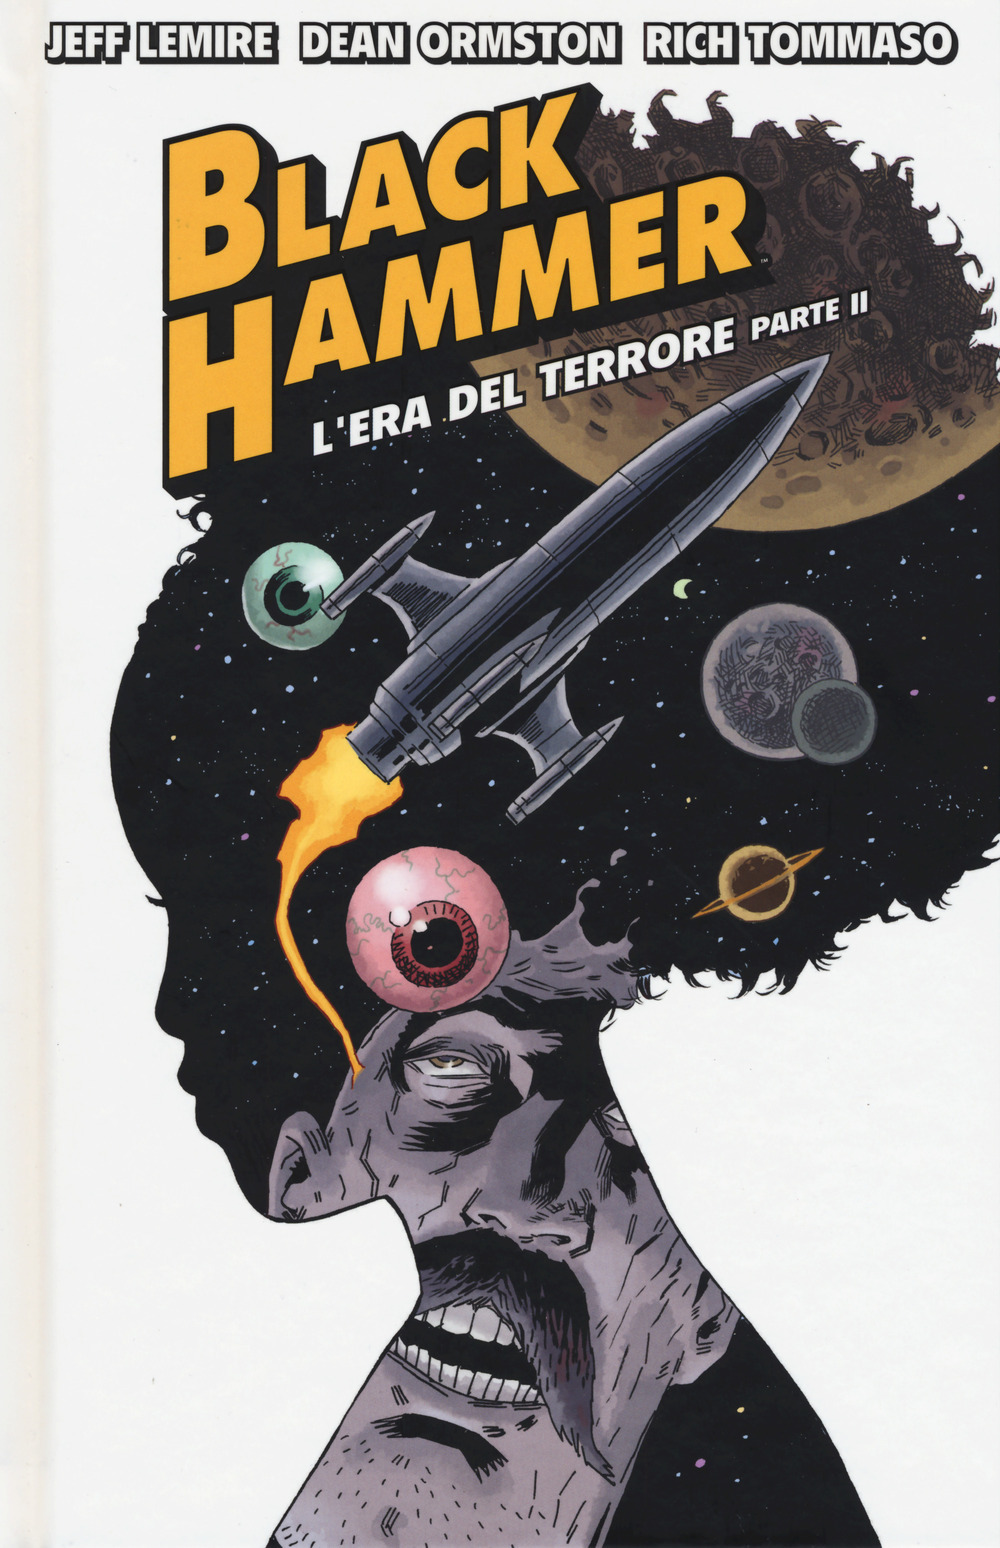 Jeff Lemire - Black Hammer #04